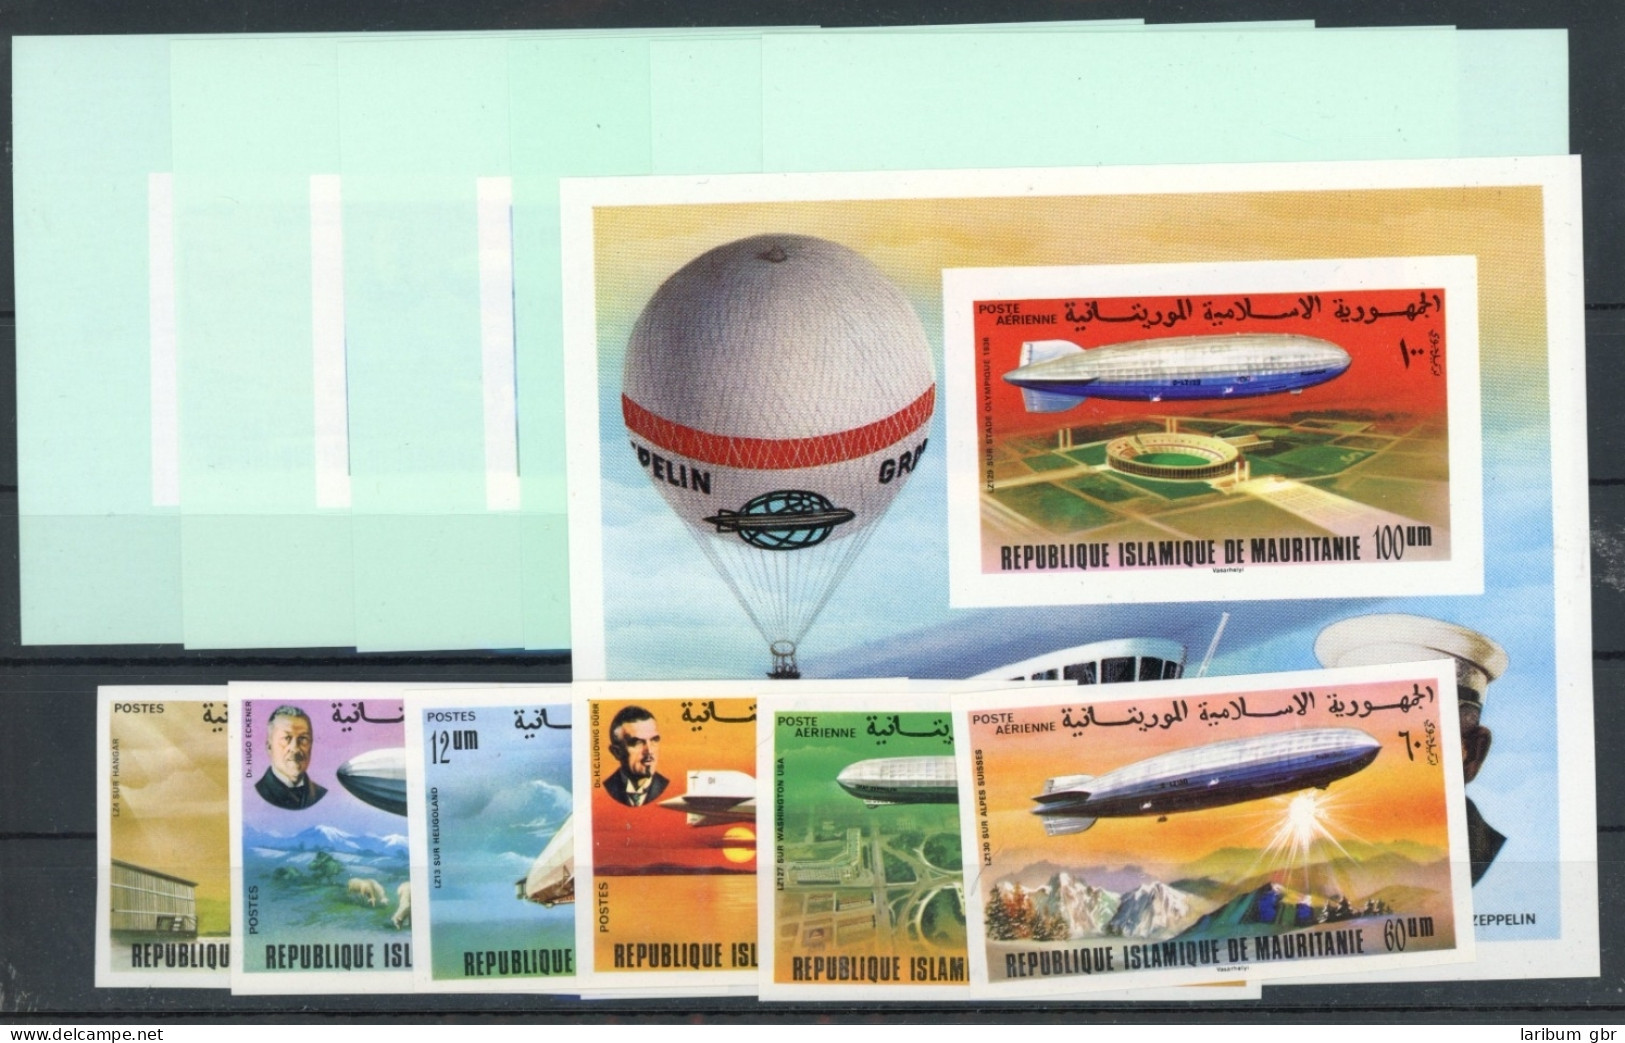 Mauretanien Einzelblöcke 539-544, Block 15 B Postfrisch Zeppelin #JK957 - Mauritania (1960-...)